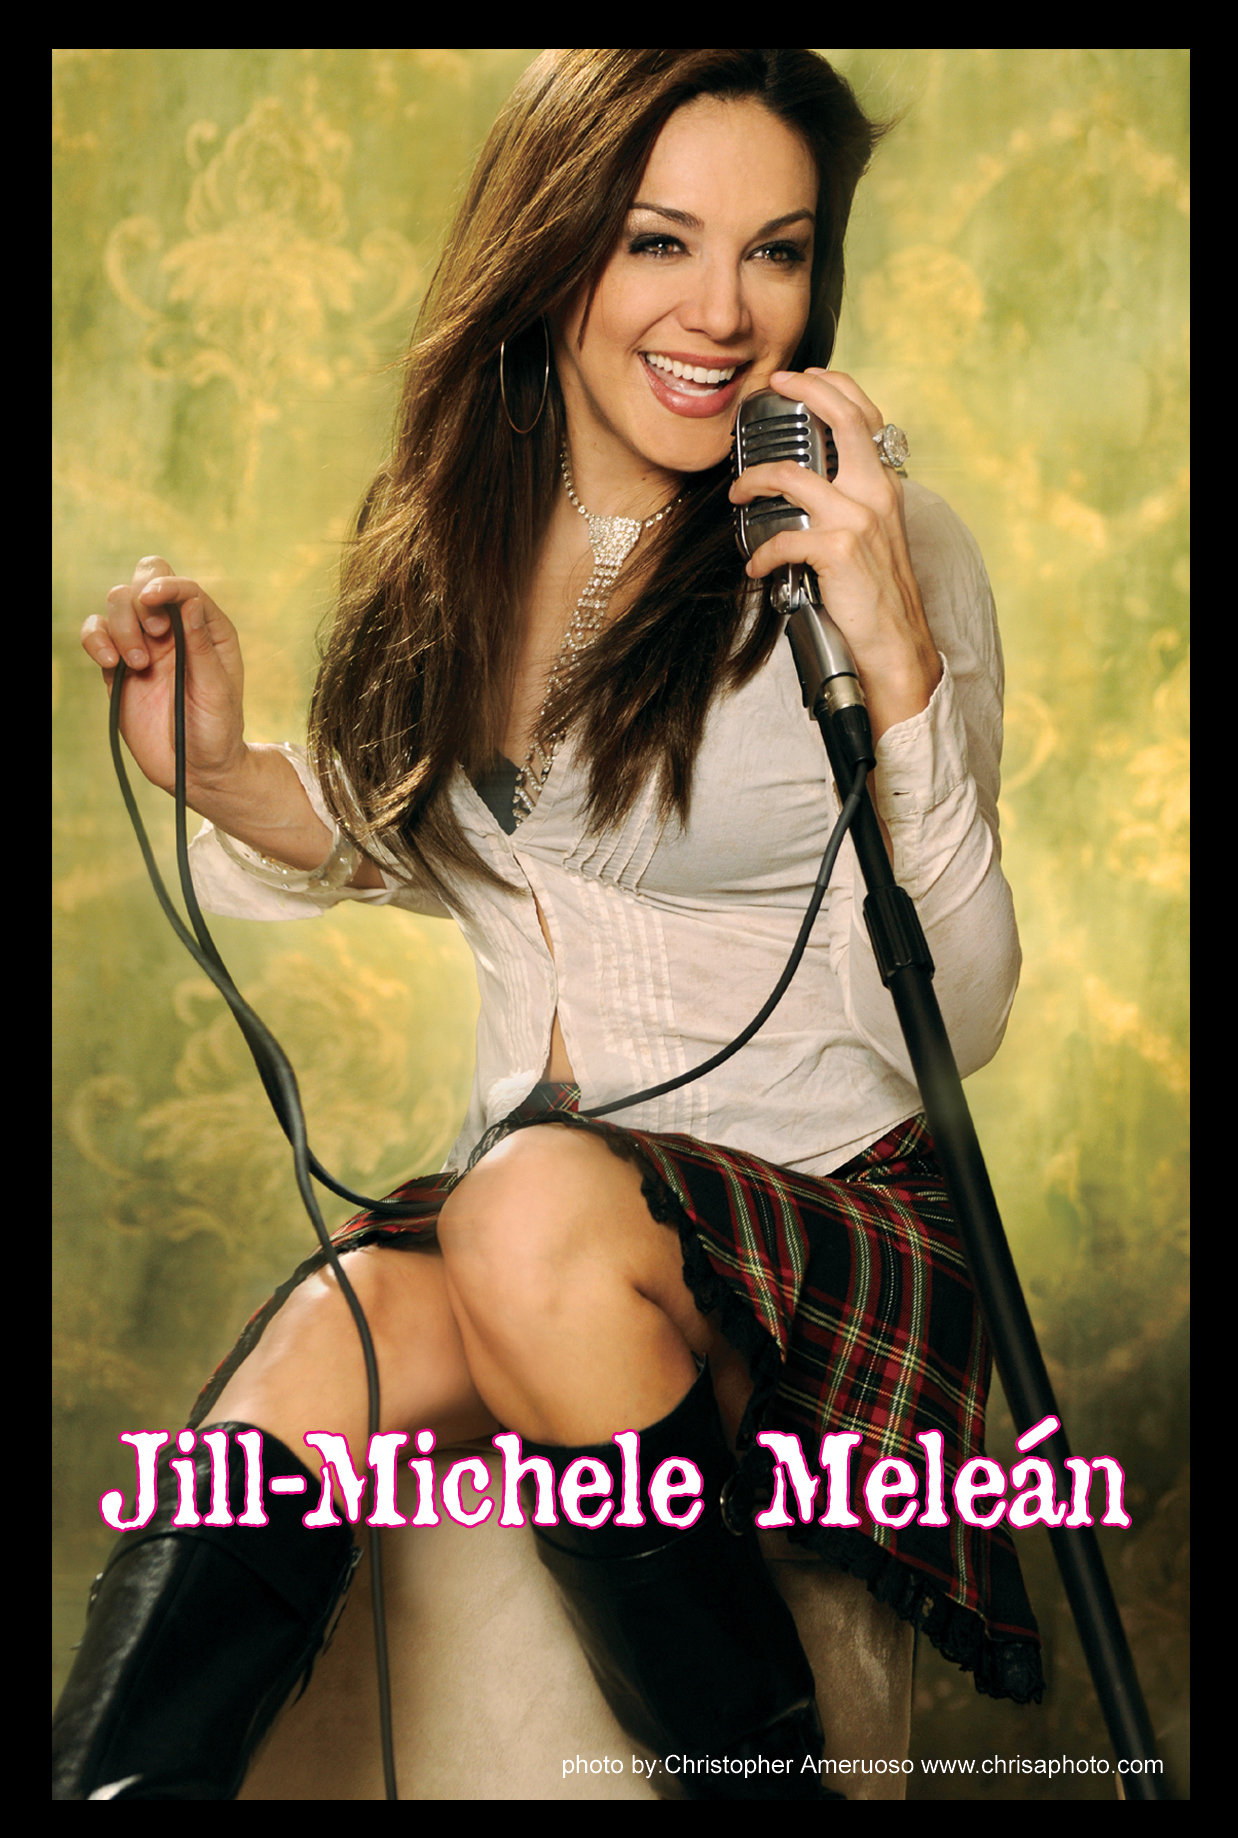 Jill-Michele Melean